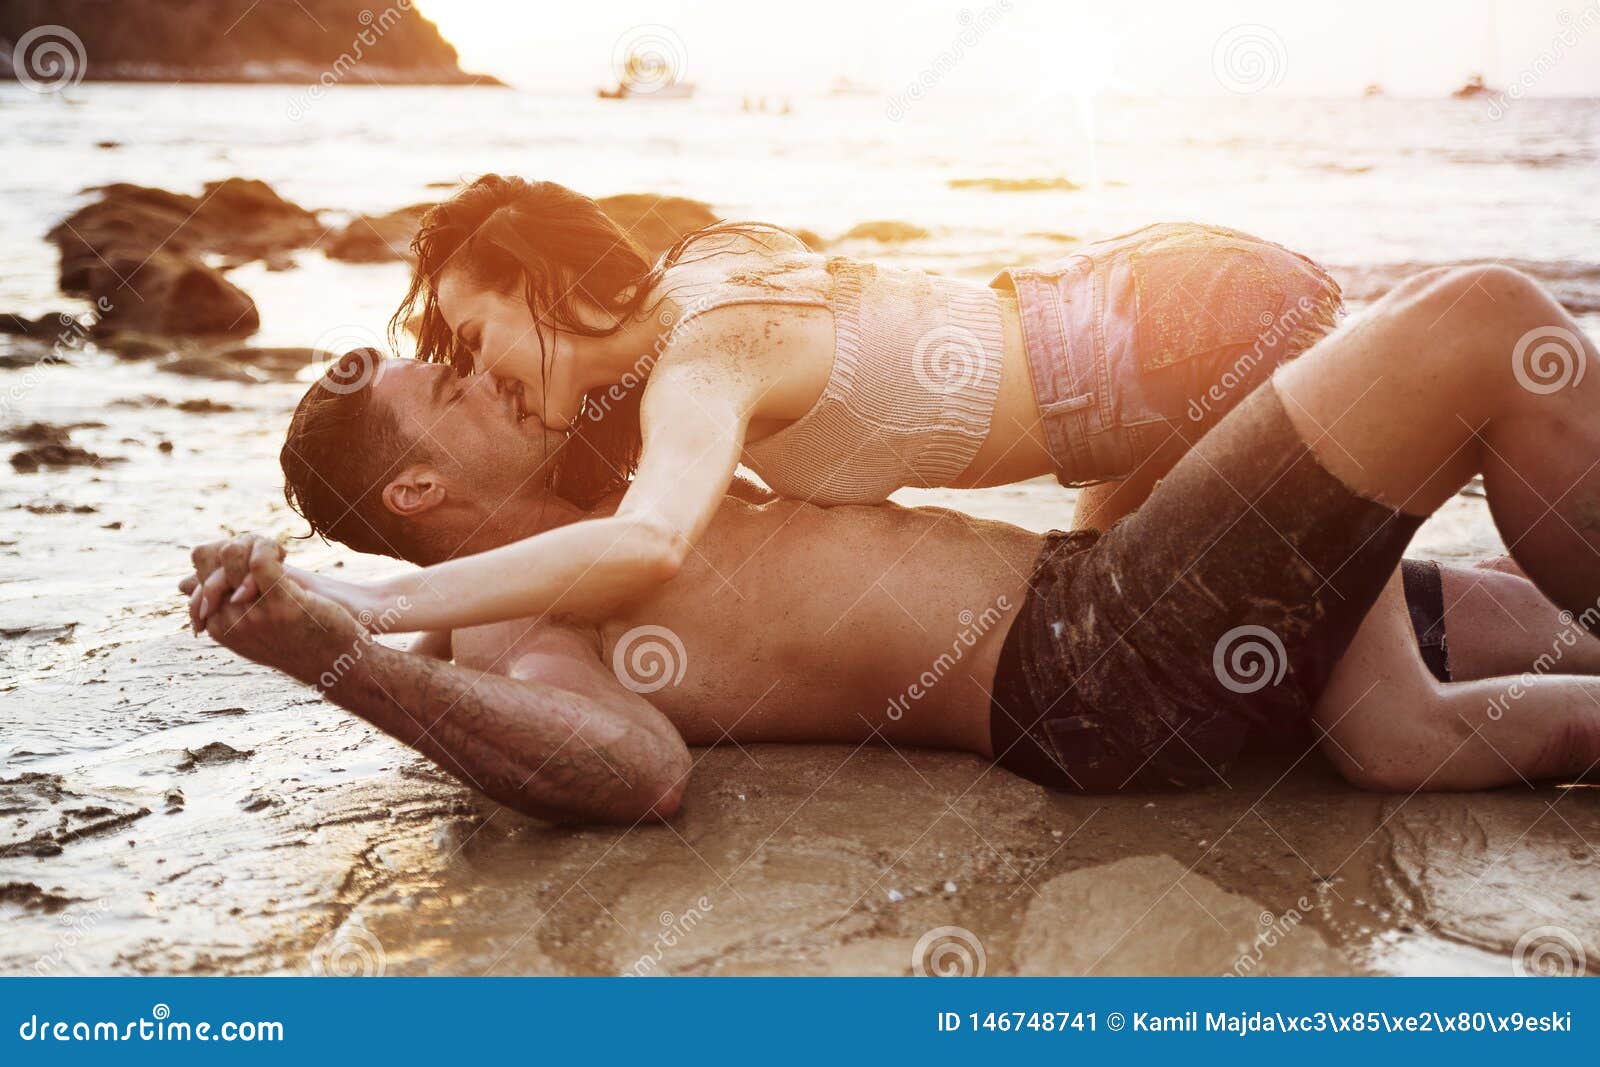 beach sex voyeur with beautiful couple Adult Pics Hq